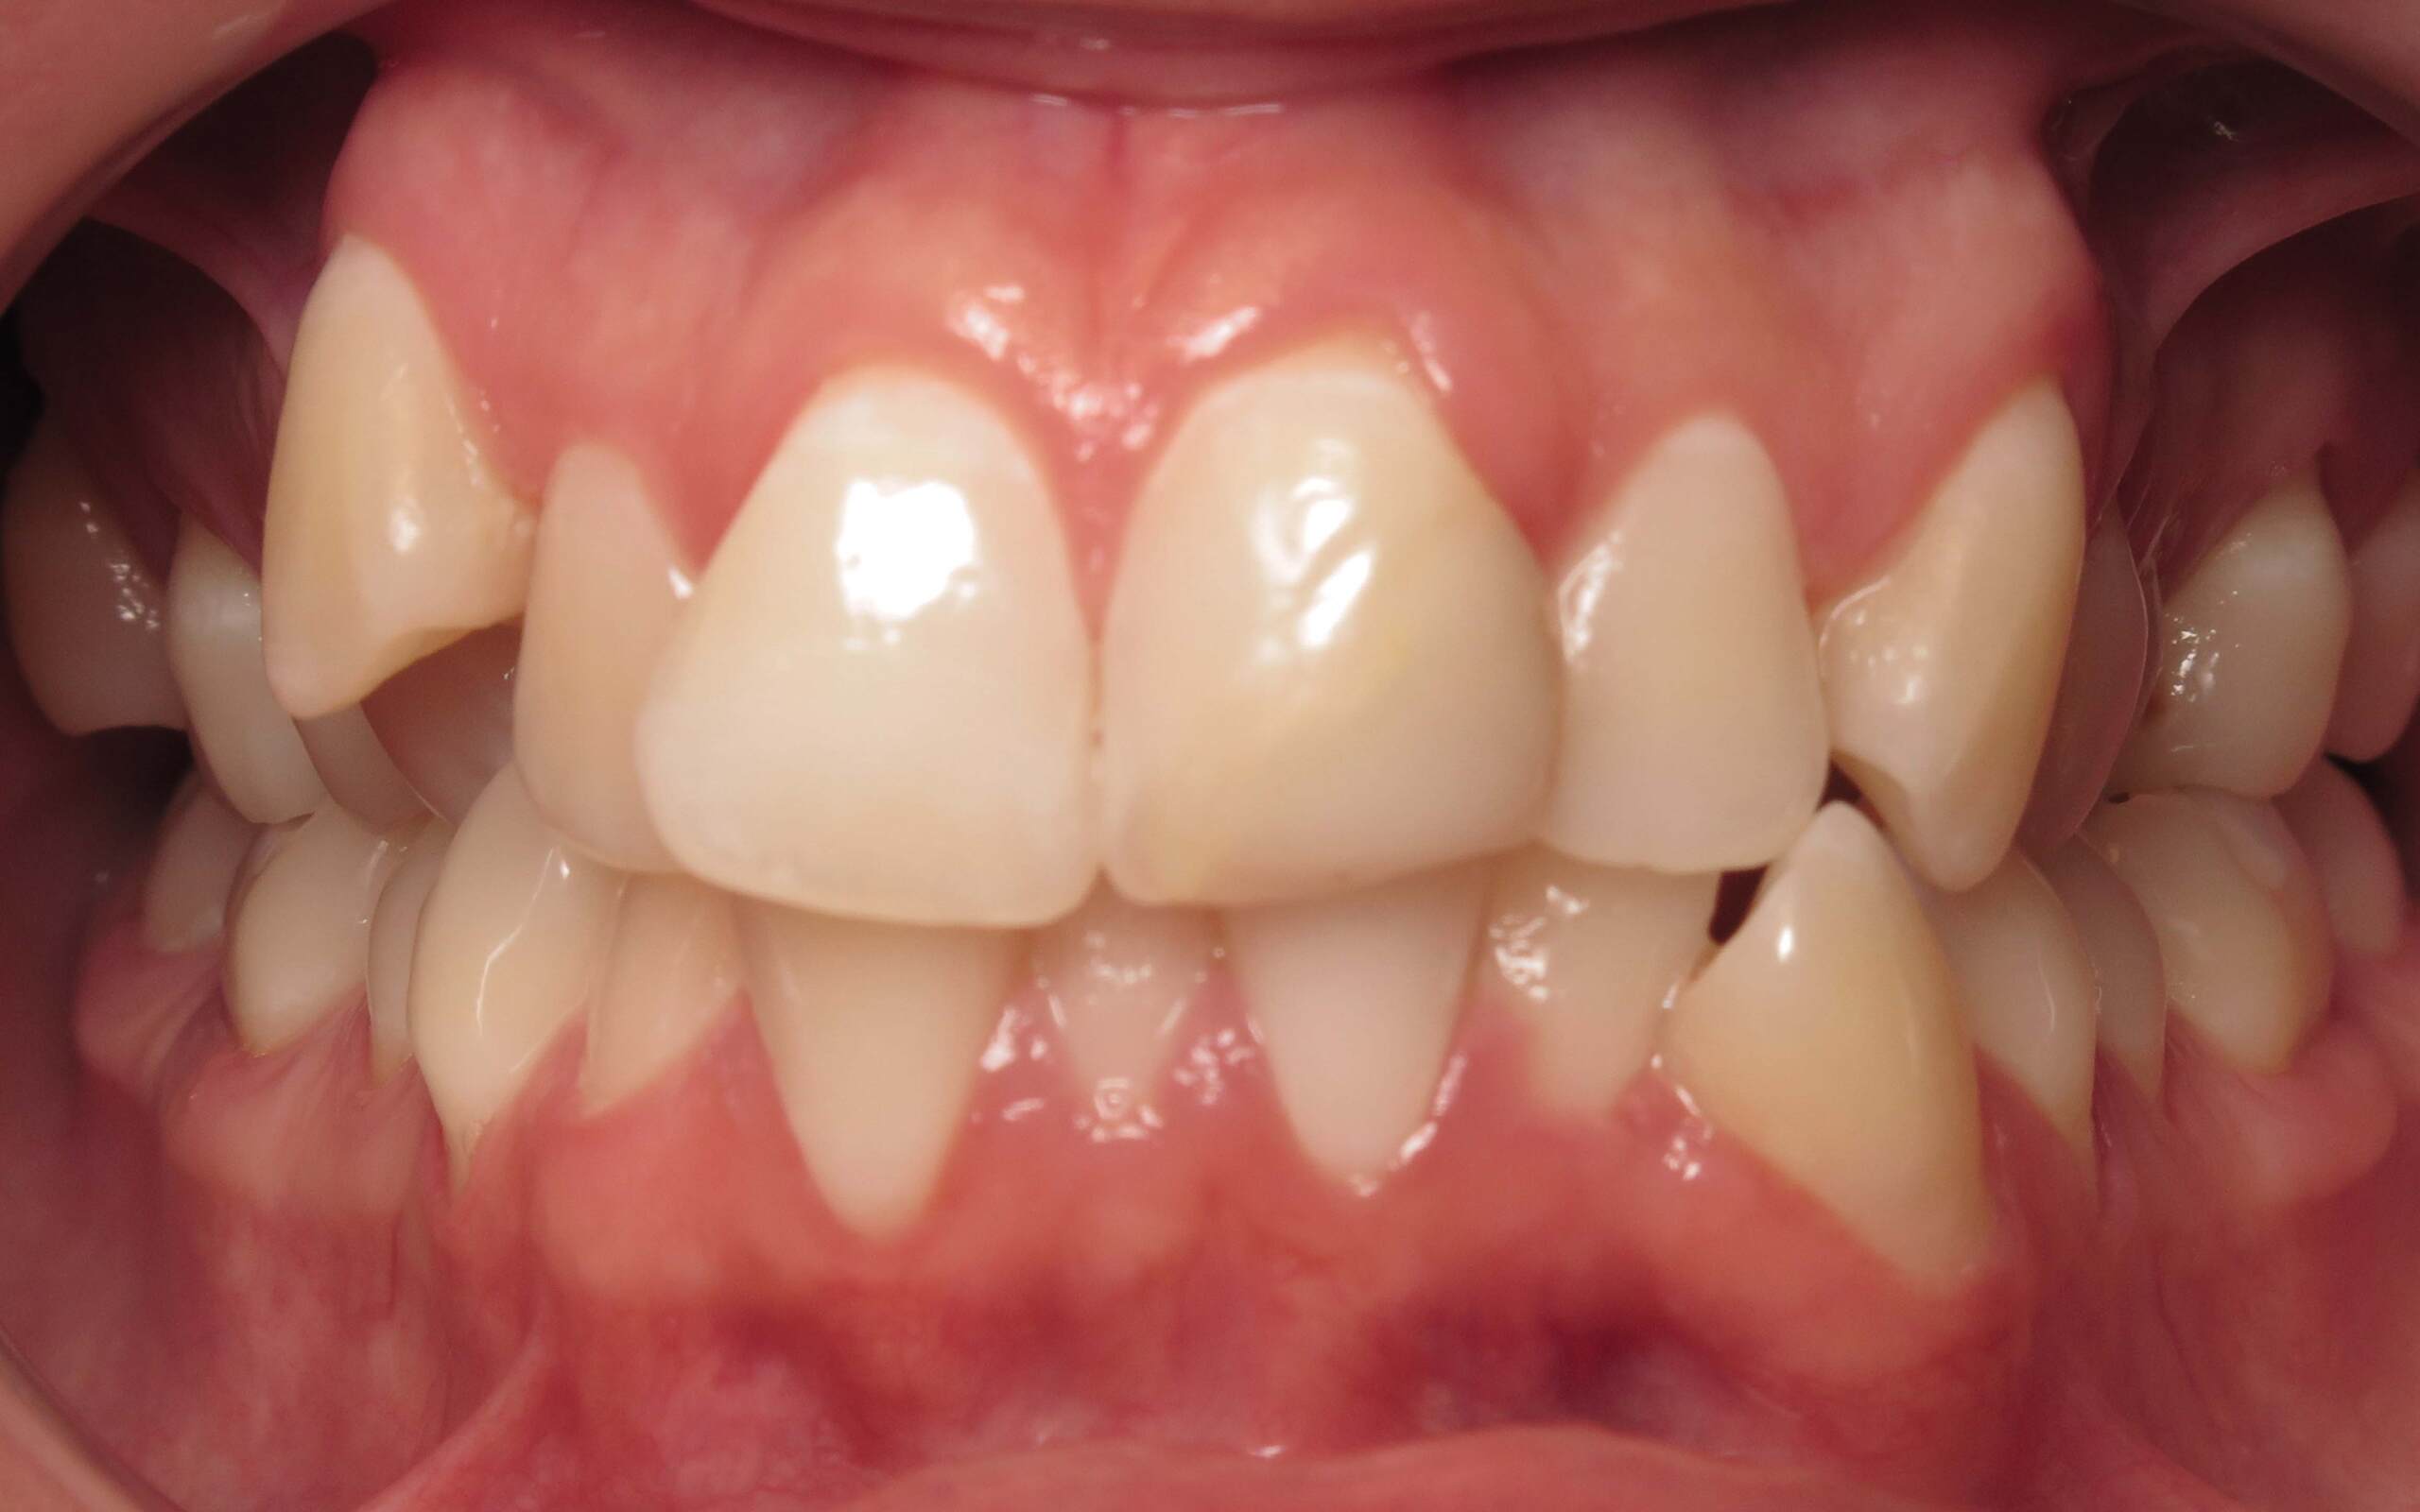 Parks Orthodontics Invisalign Patient 16 - Before